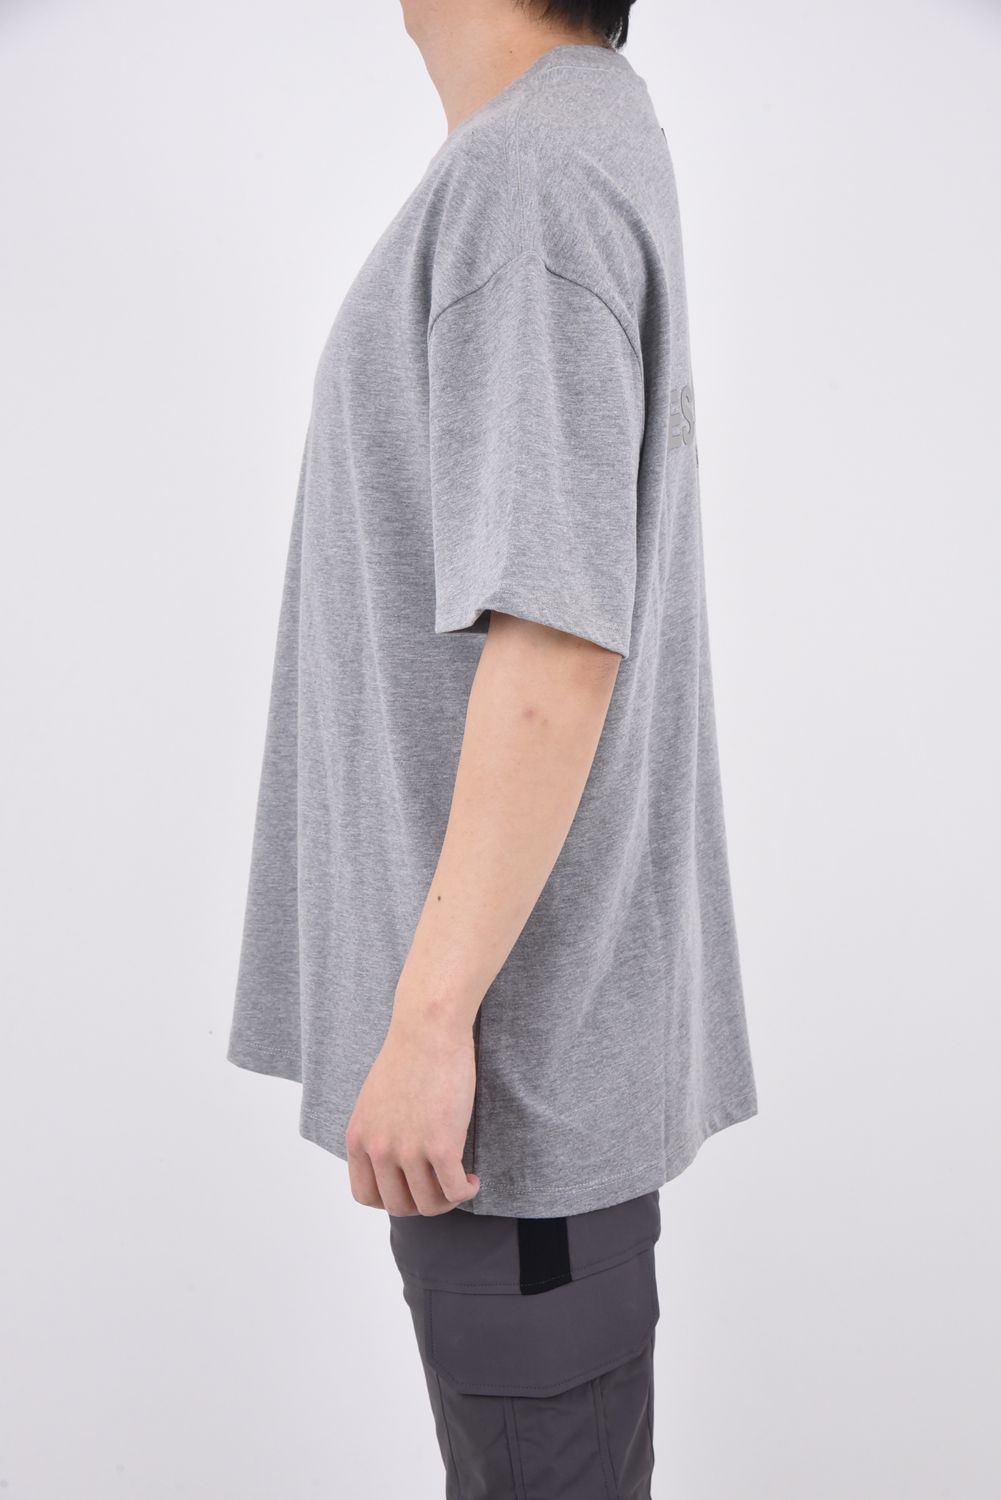 ESSENTIALS BACK LOGO T-Shirt / フロント ロゴ 半袖 Tシャツ ダークオートミール - S